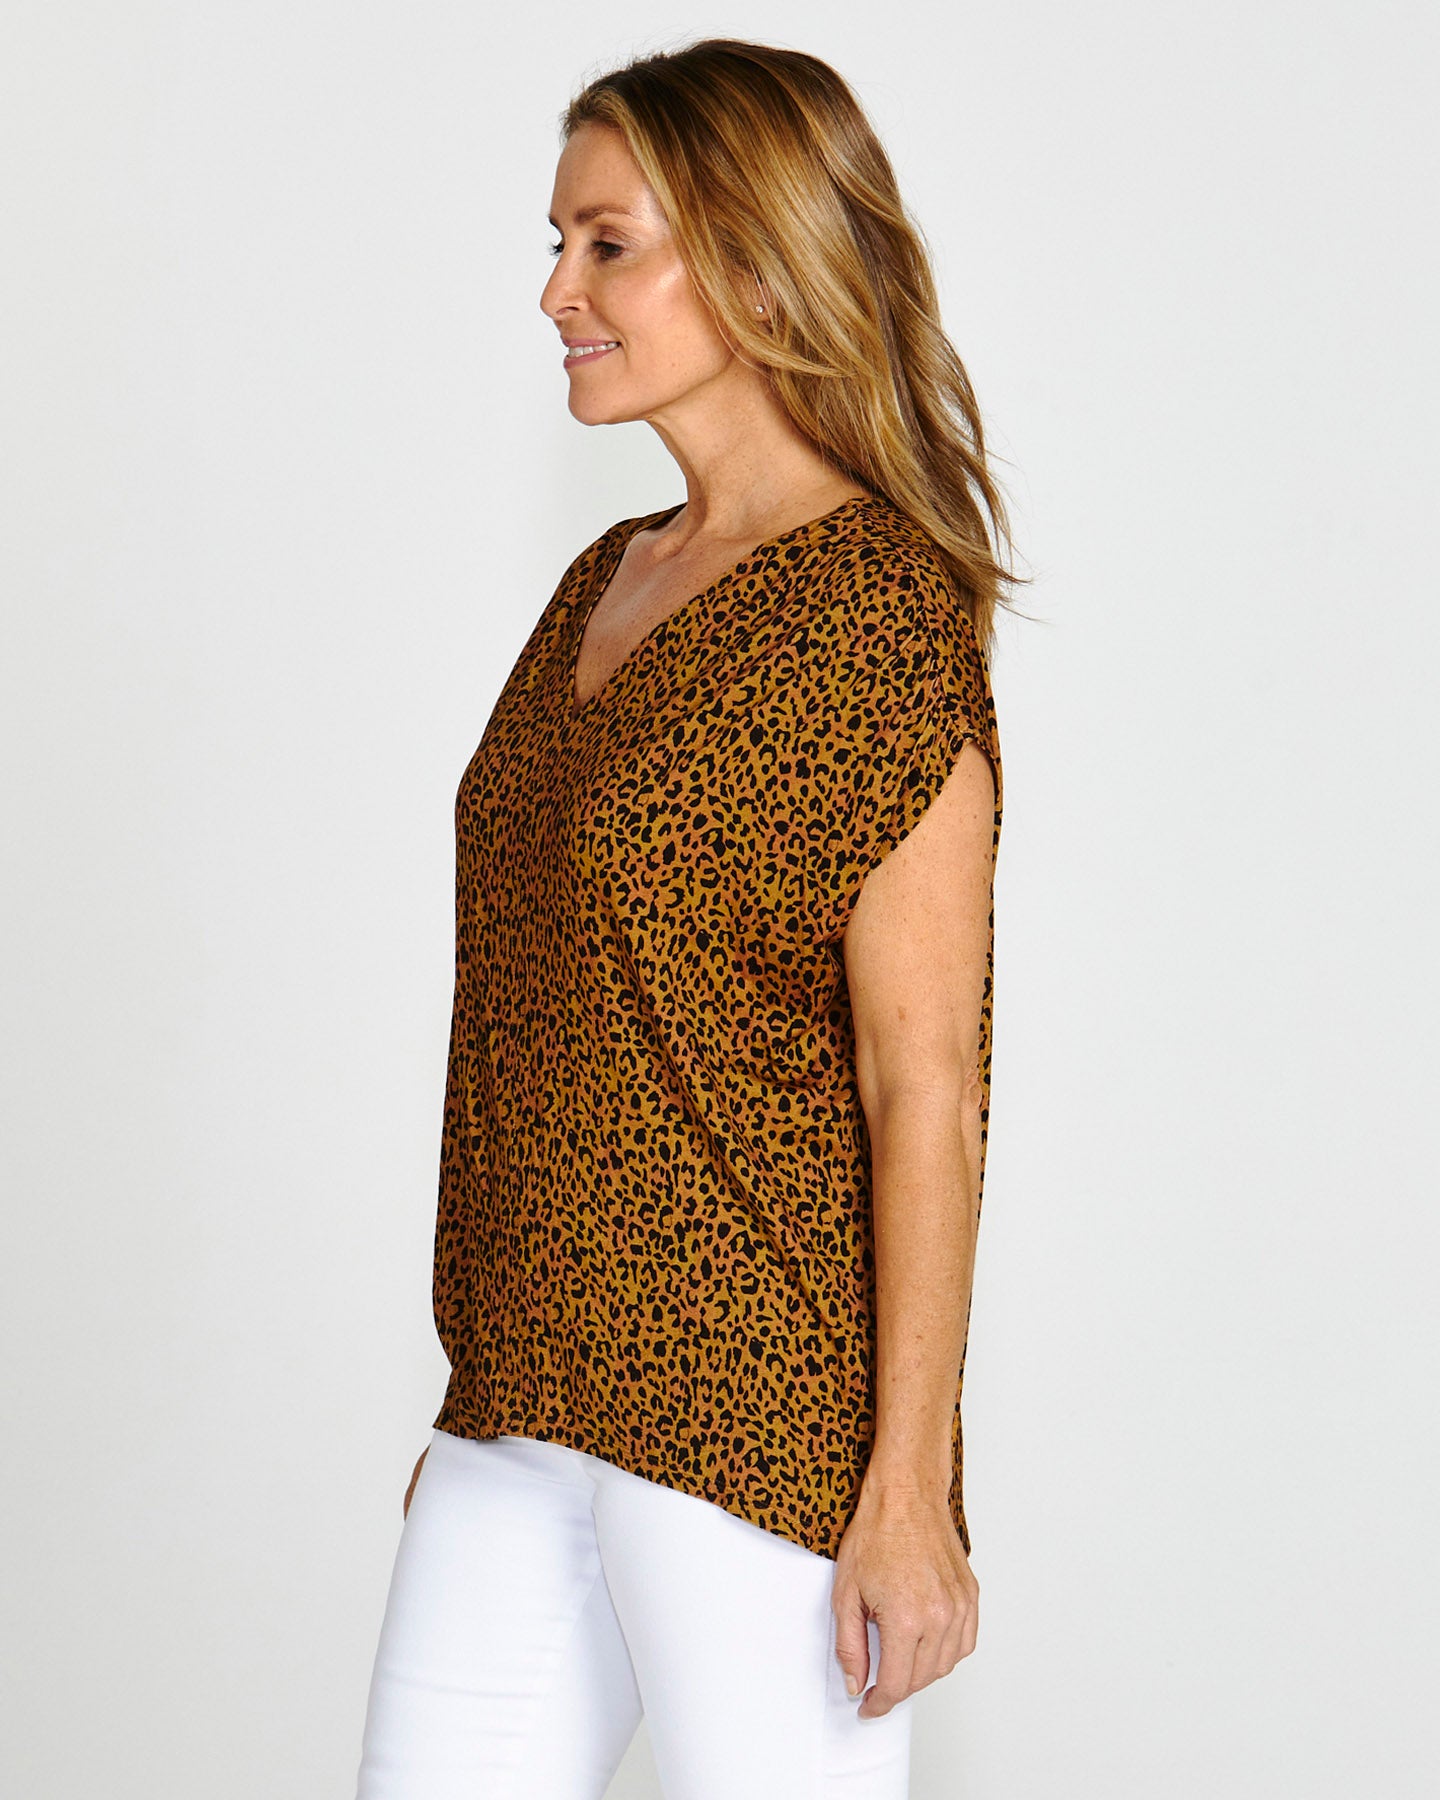 Chelsea Stretchy V-Neck Cap Sleeve Tee - Wild Leopard Print